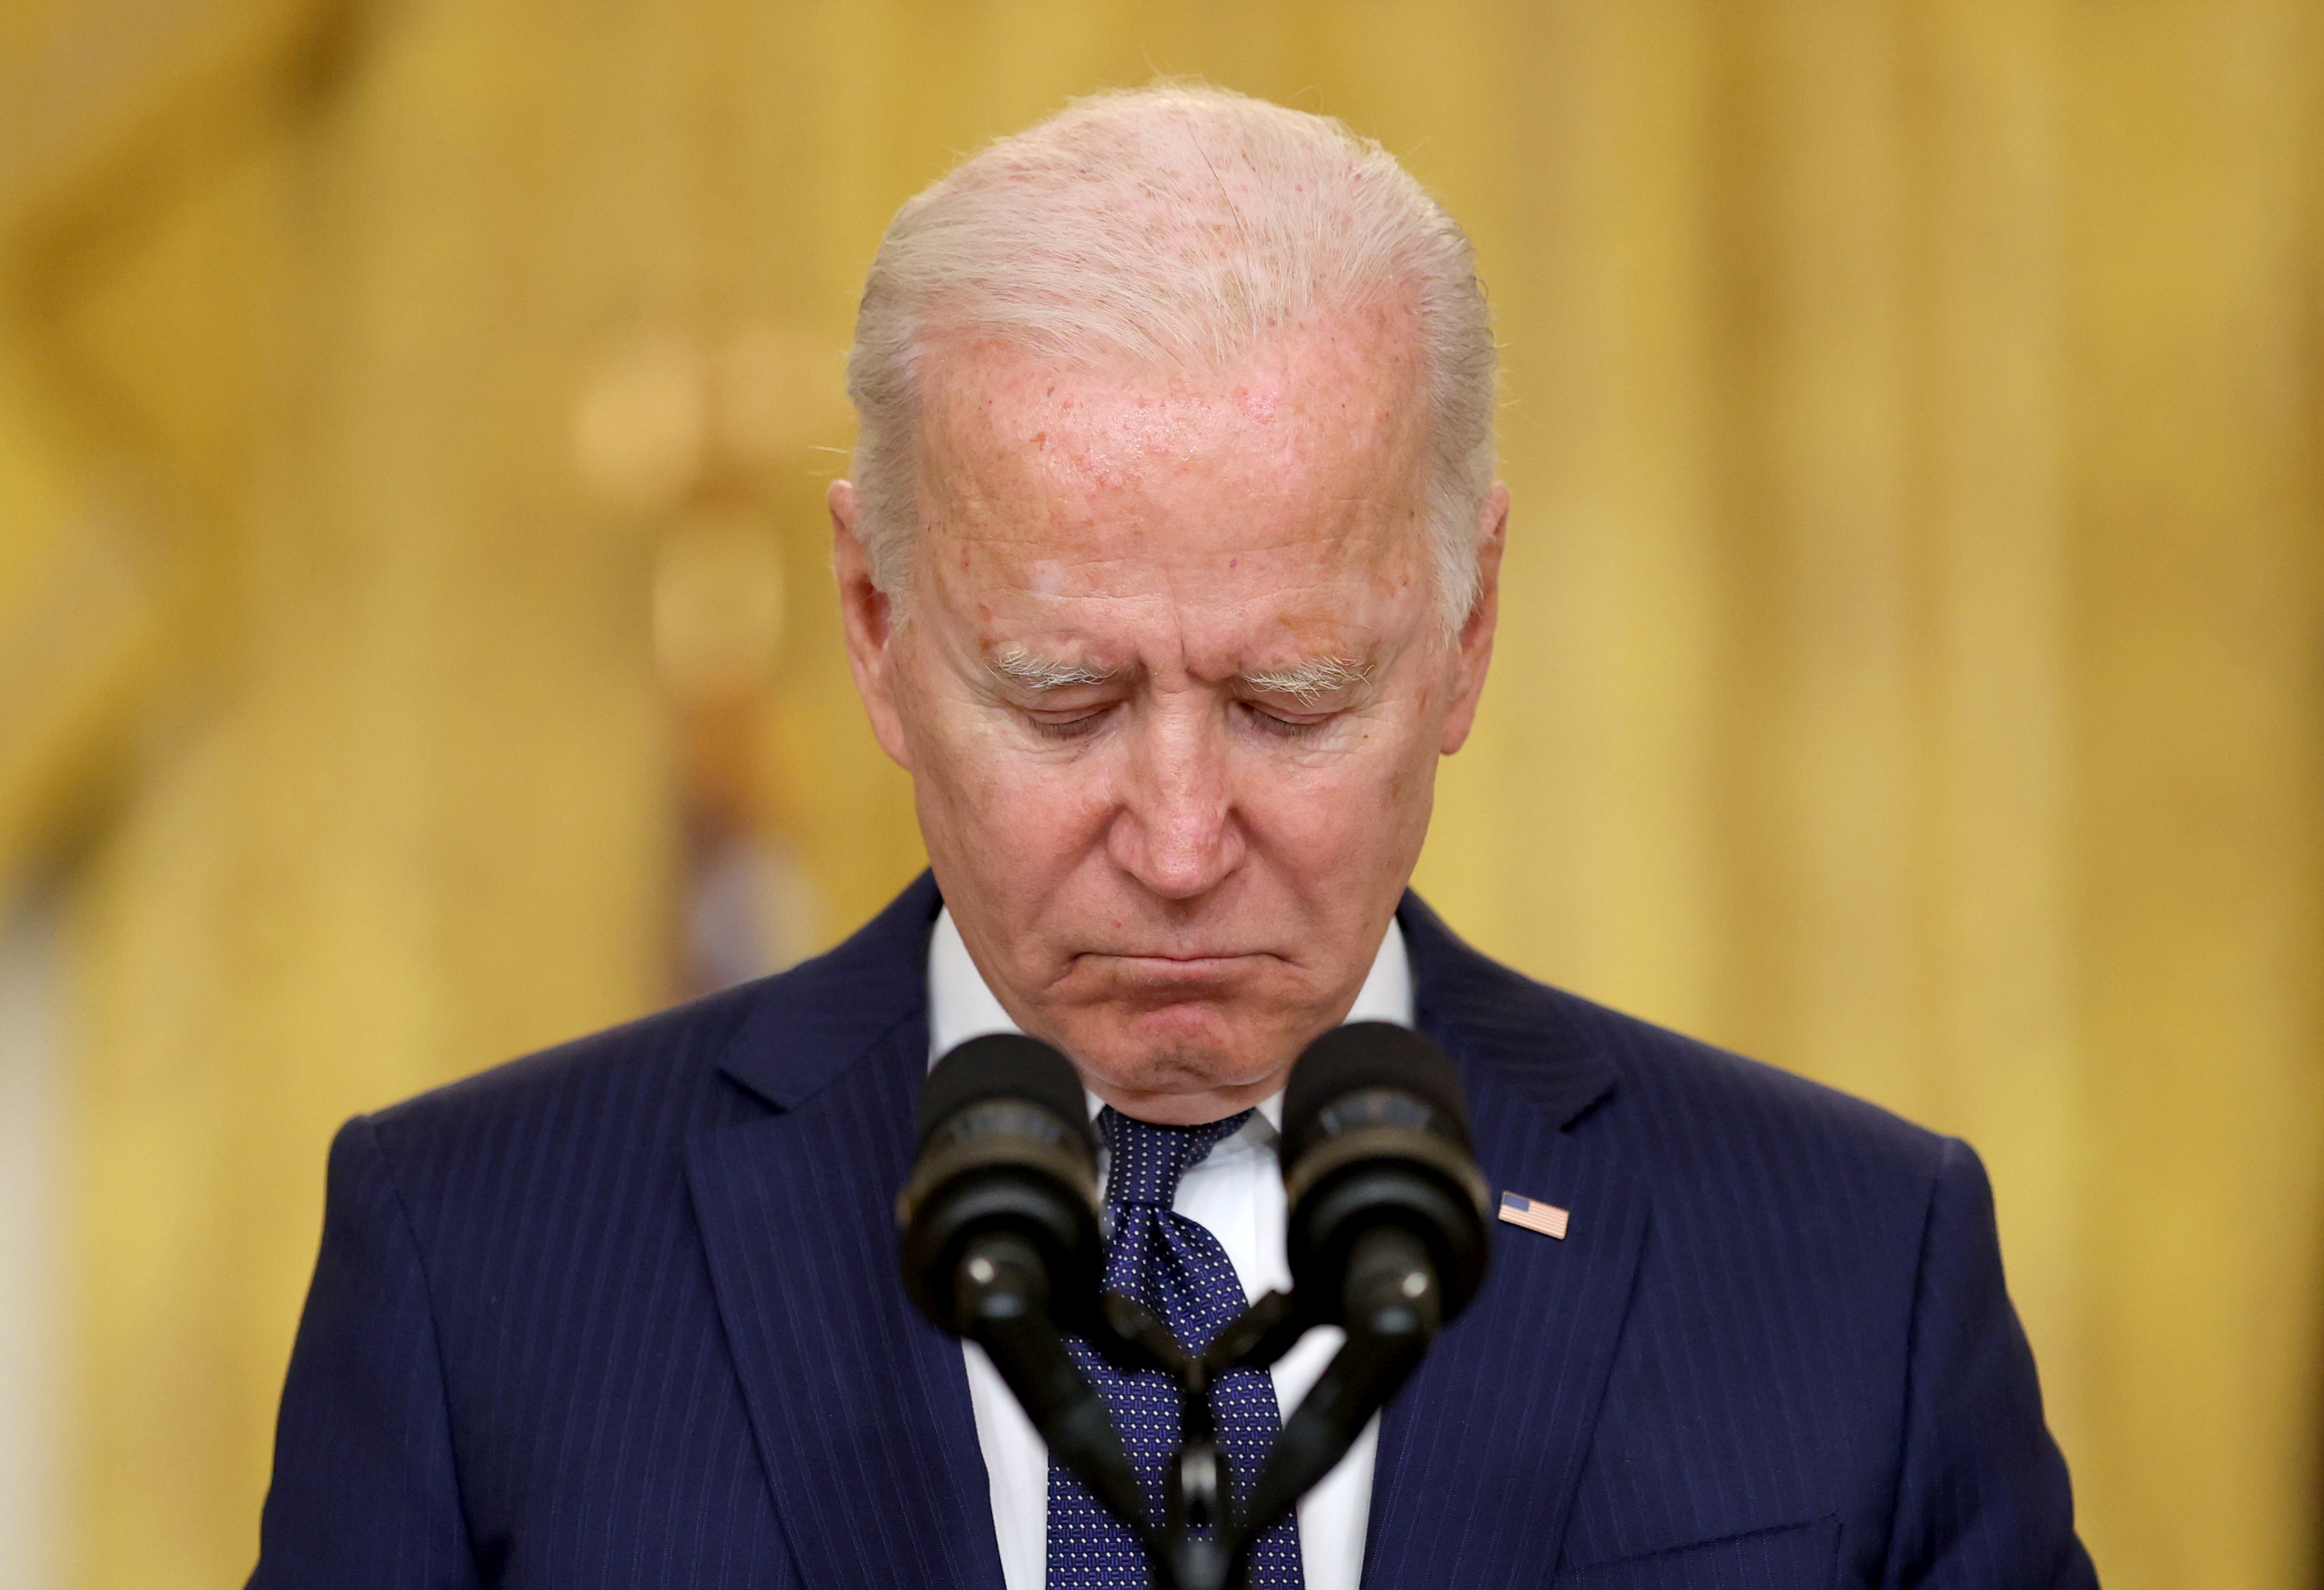 U.S. President Joe Biden delivers remarks about Afghanistan, in Washington